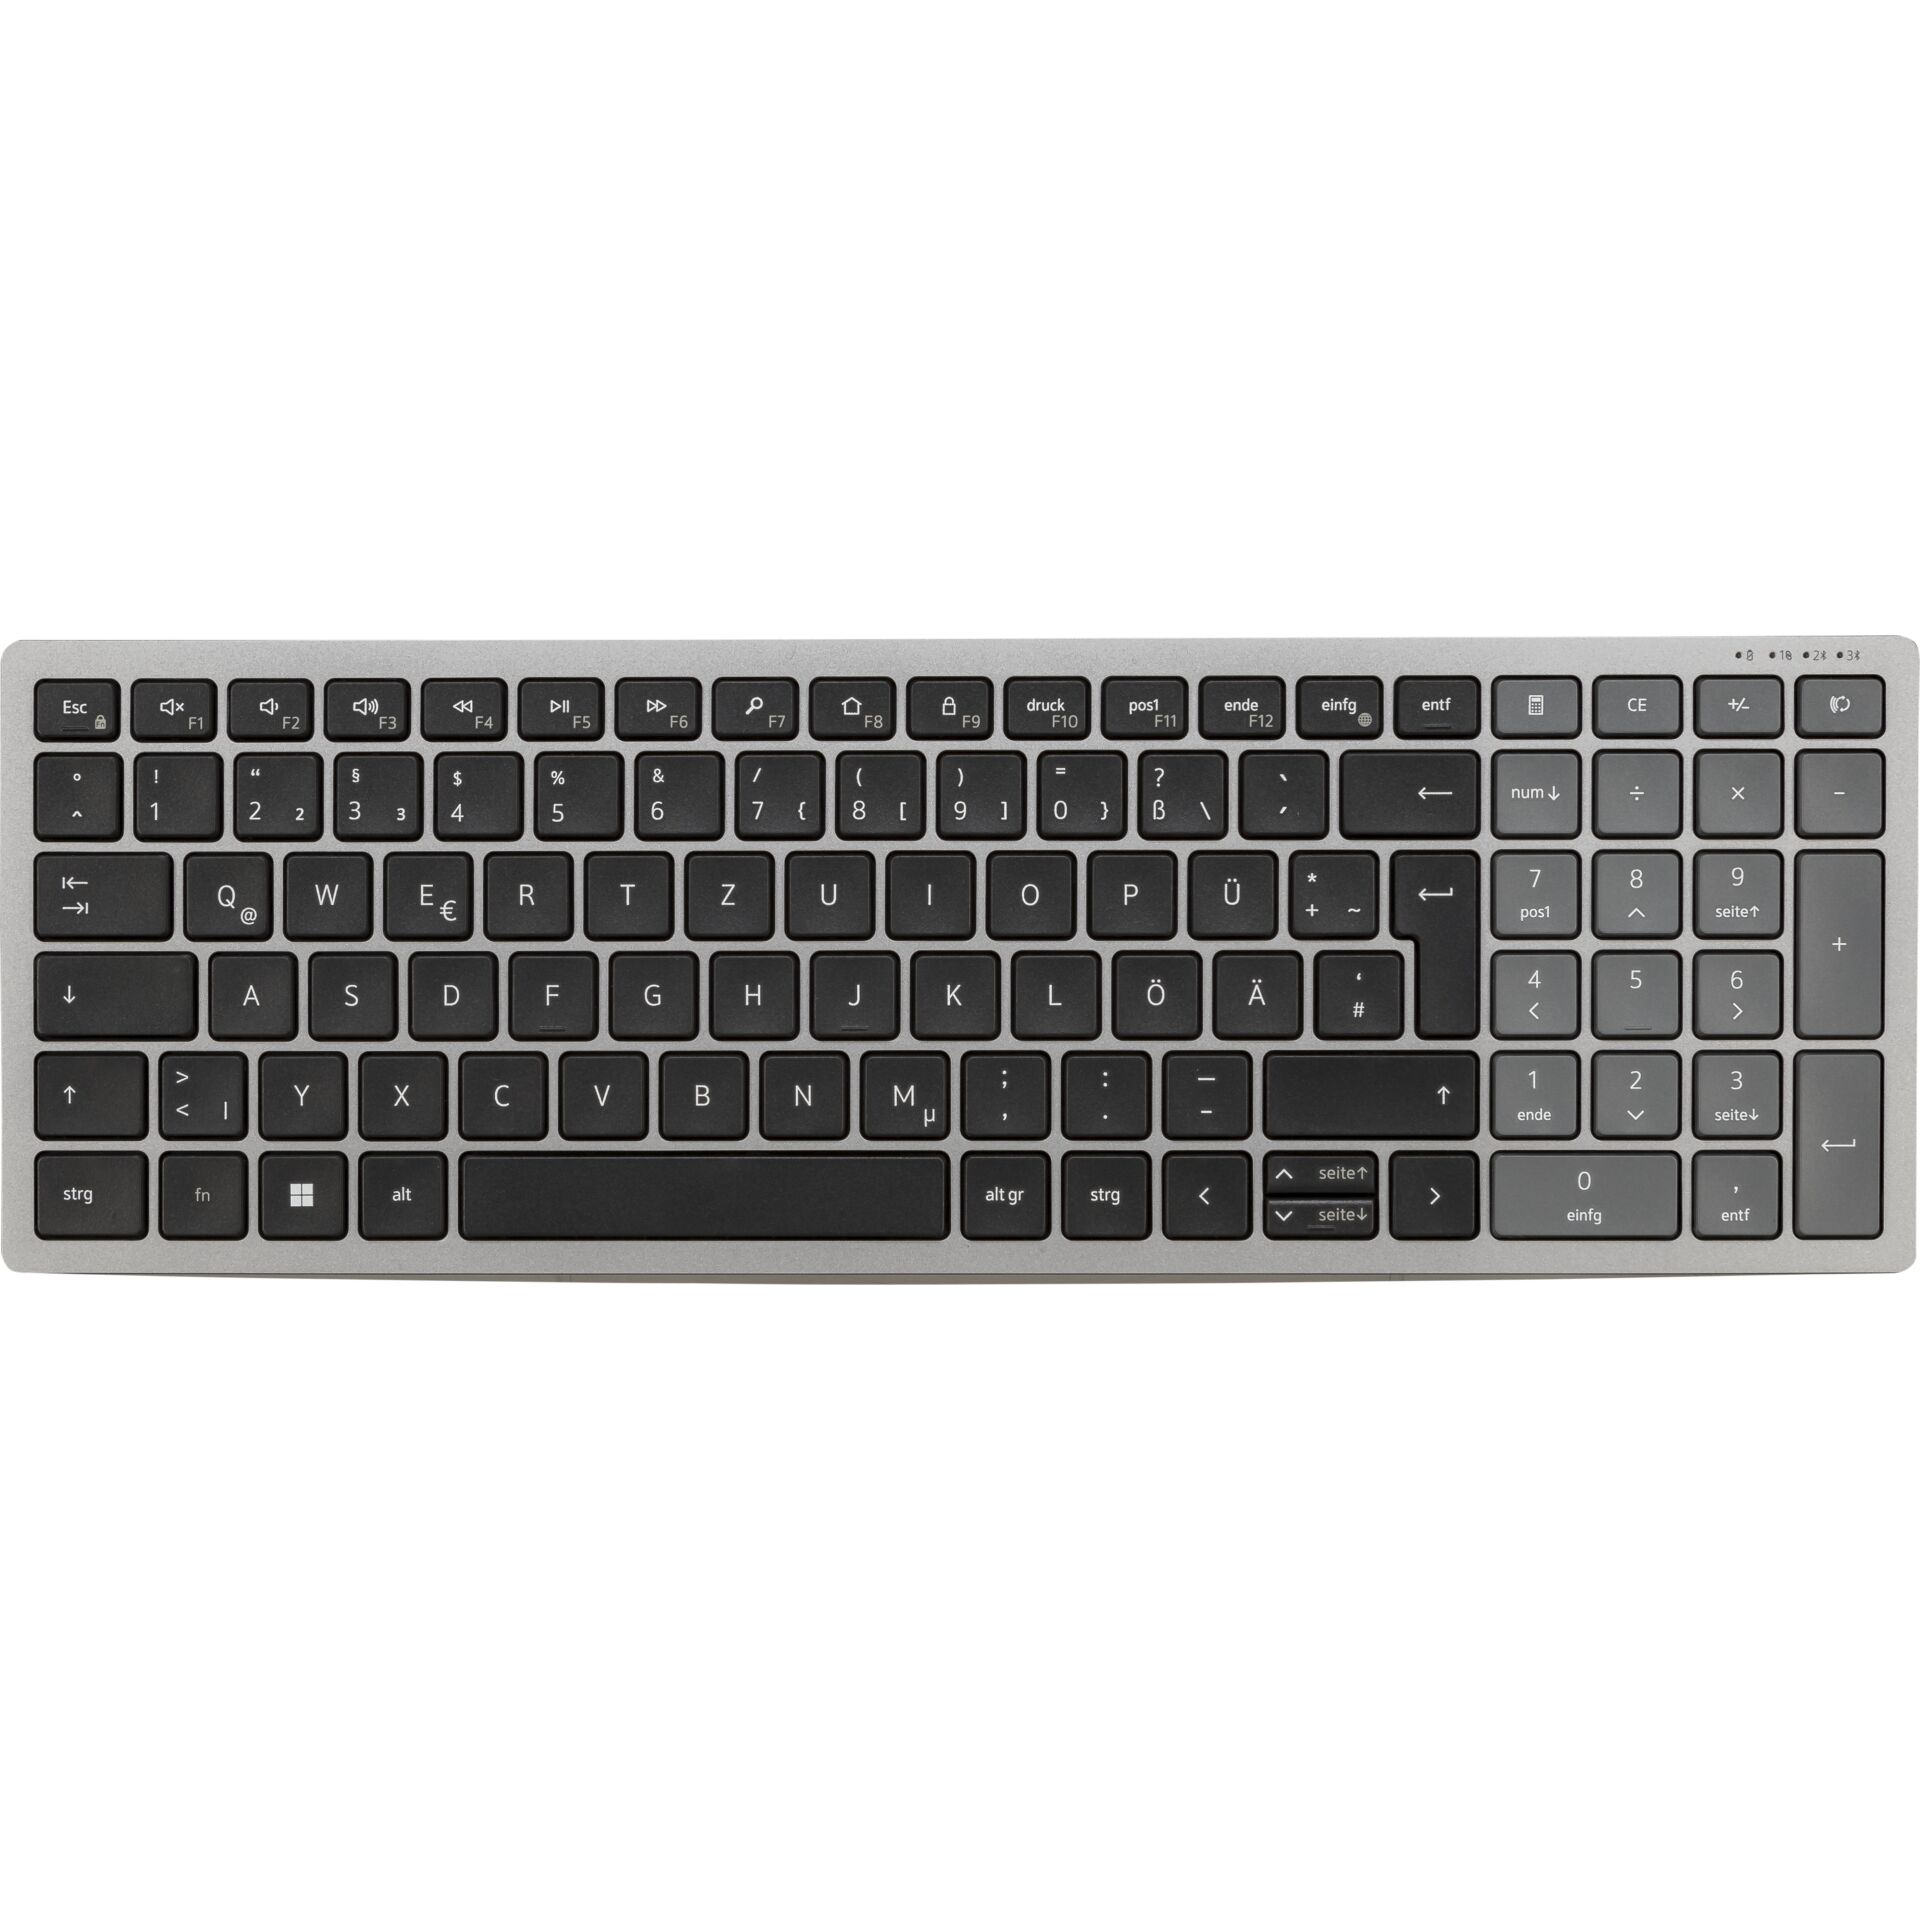 Dell KB740 Compact Multi-Device Wireless Keyboard Titan Gray, grau/schwarz, USB/Bluetooth, DE